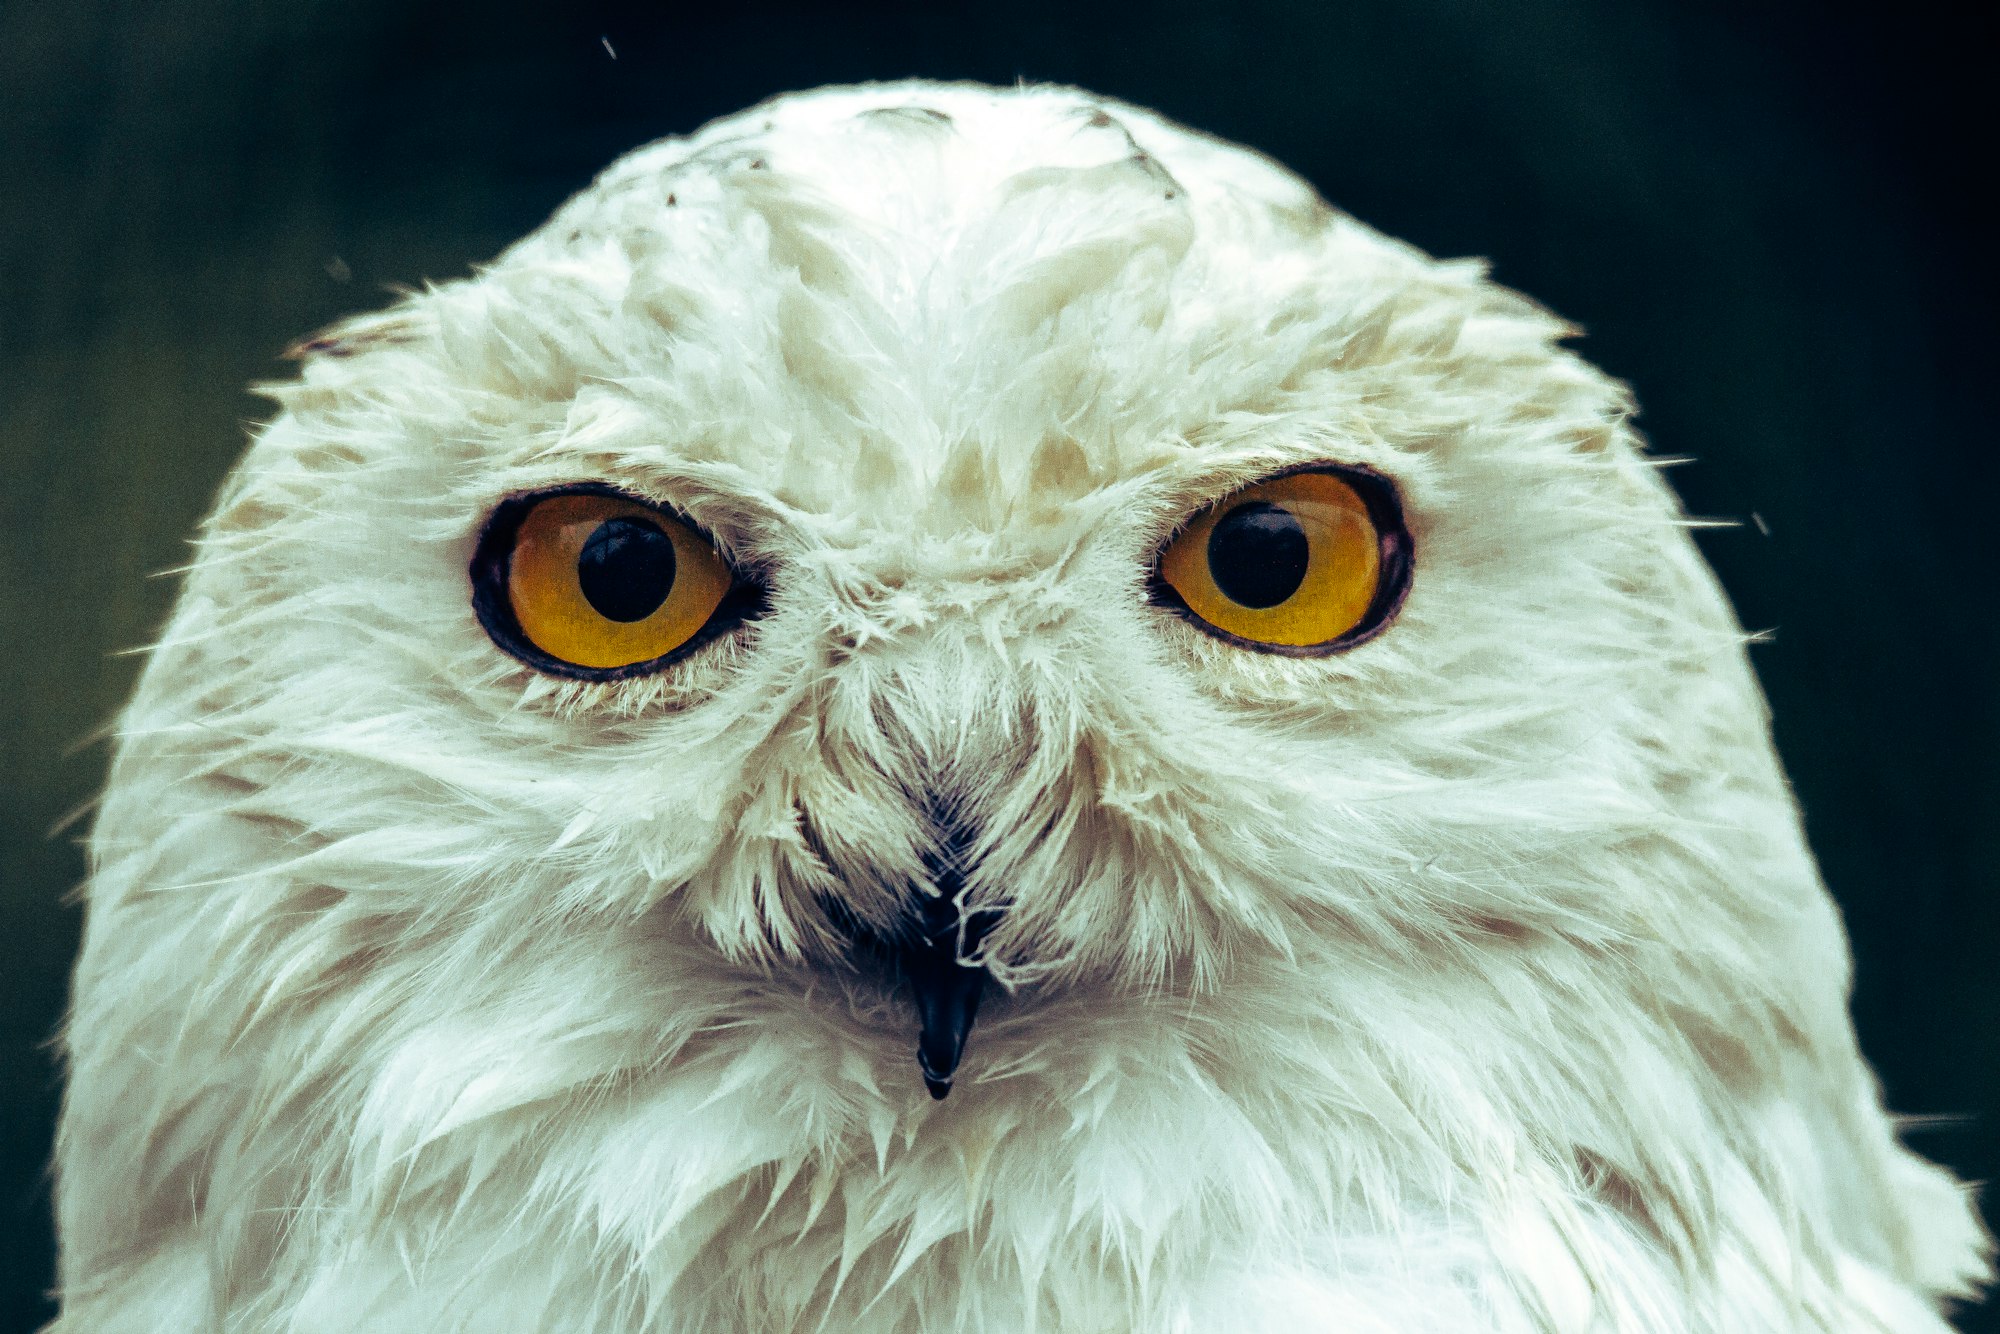 Harry potter owl close up :-)